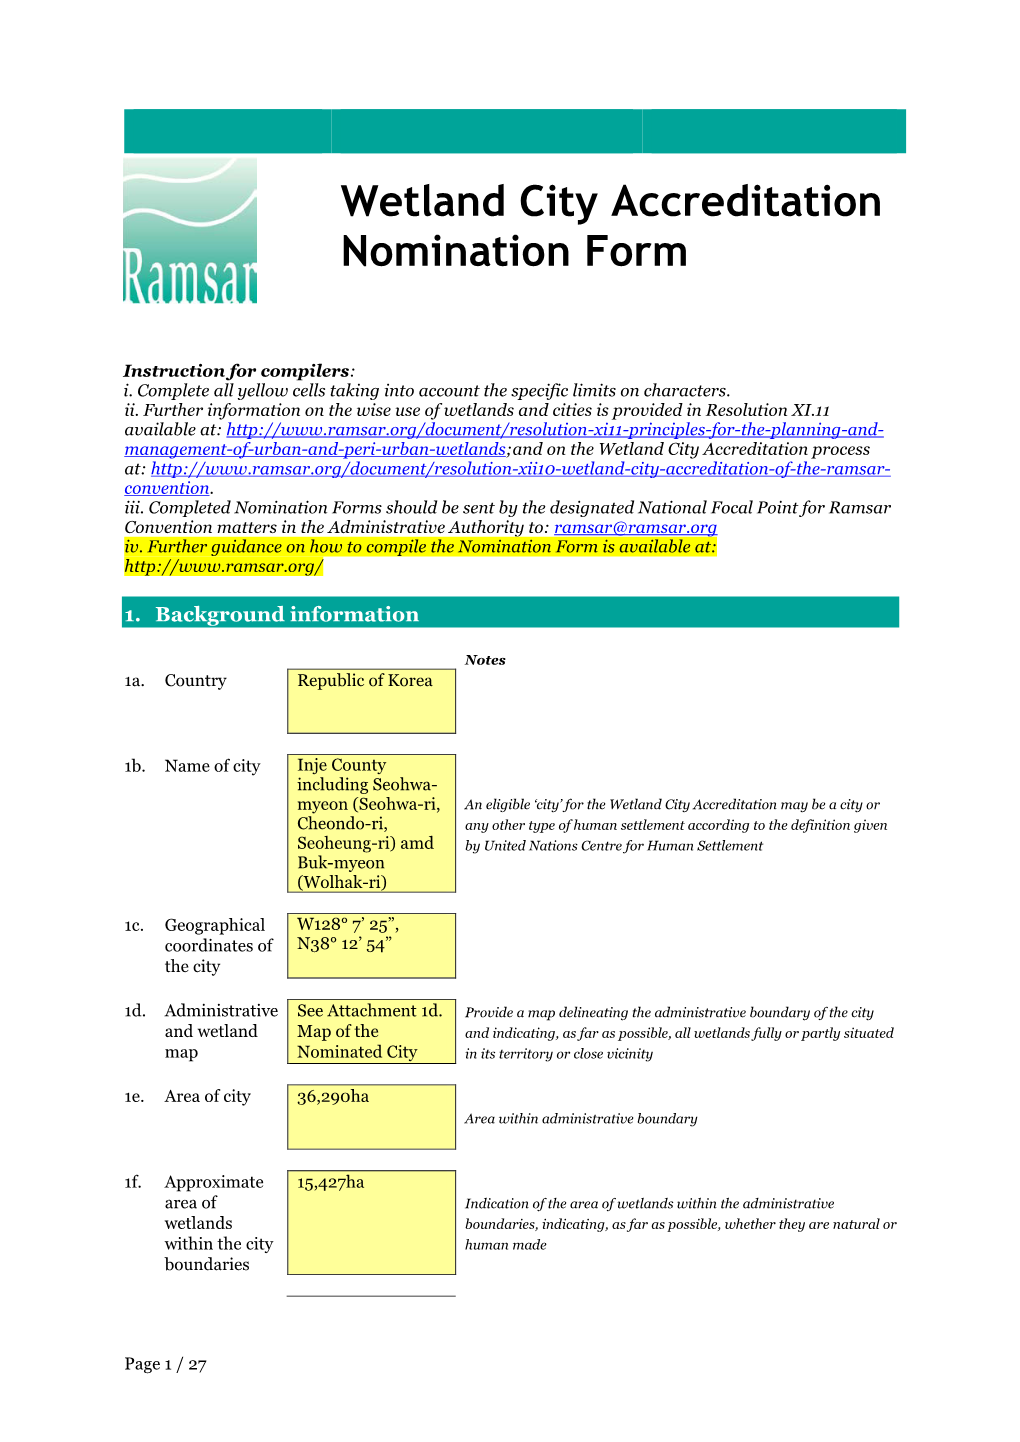 Wetland City Accreditation Nomination Form